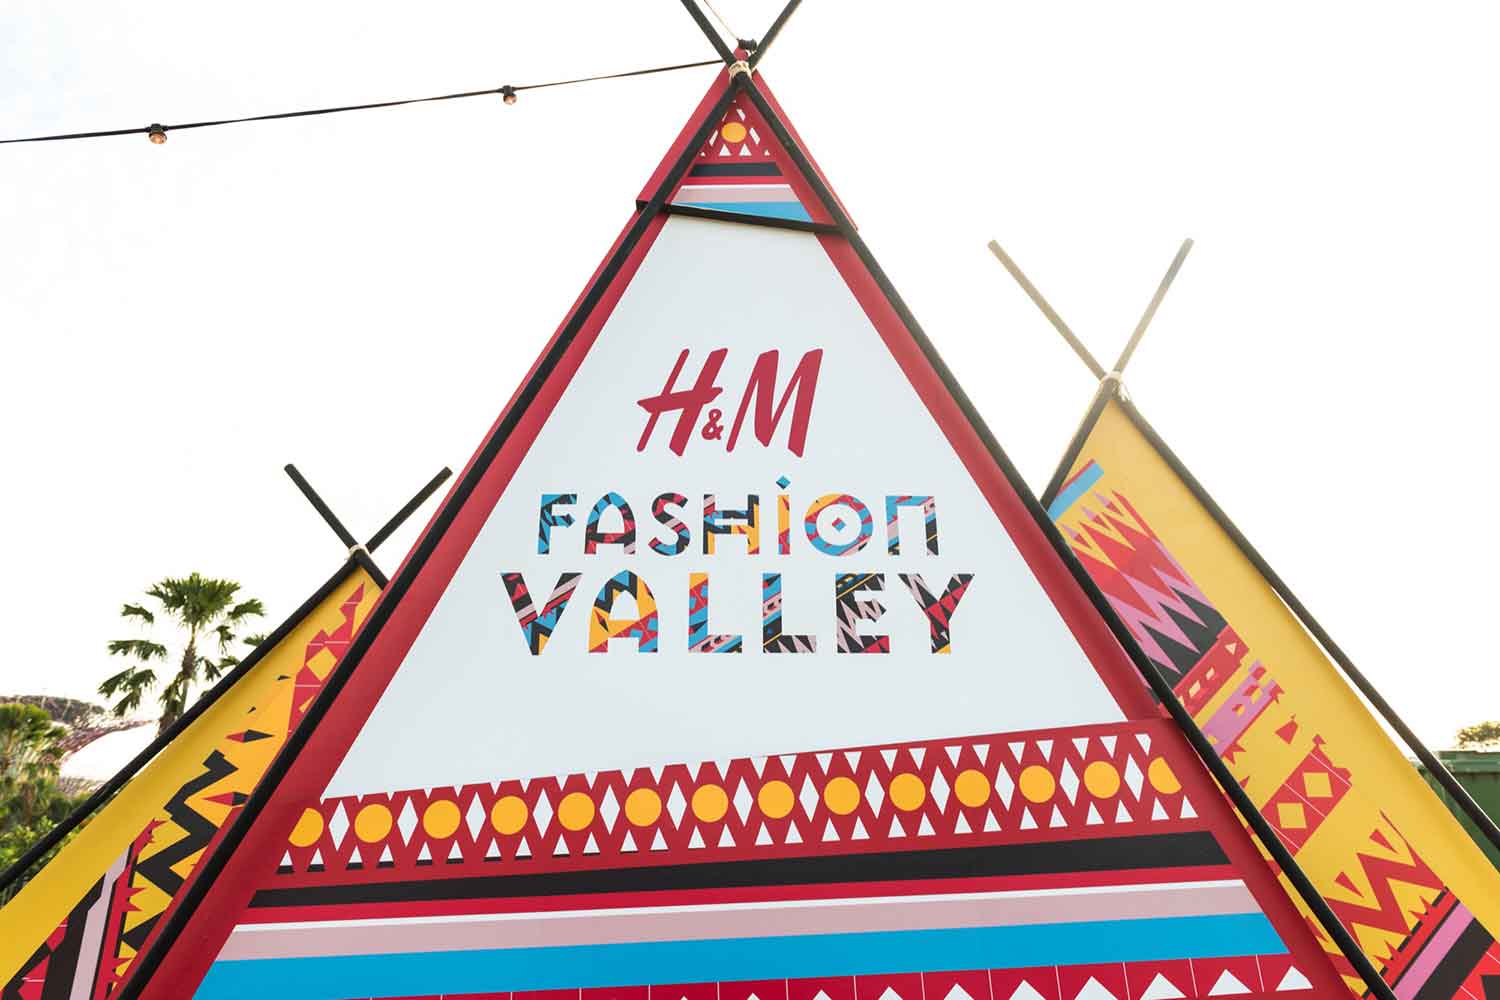 fashion valley logo